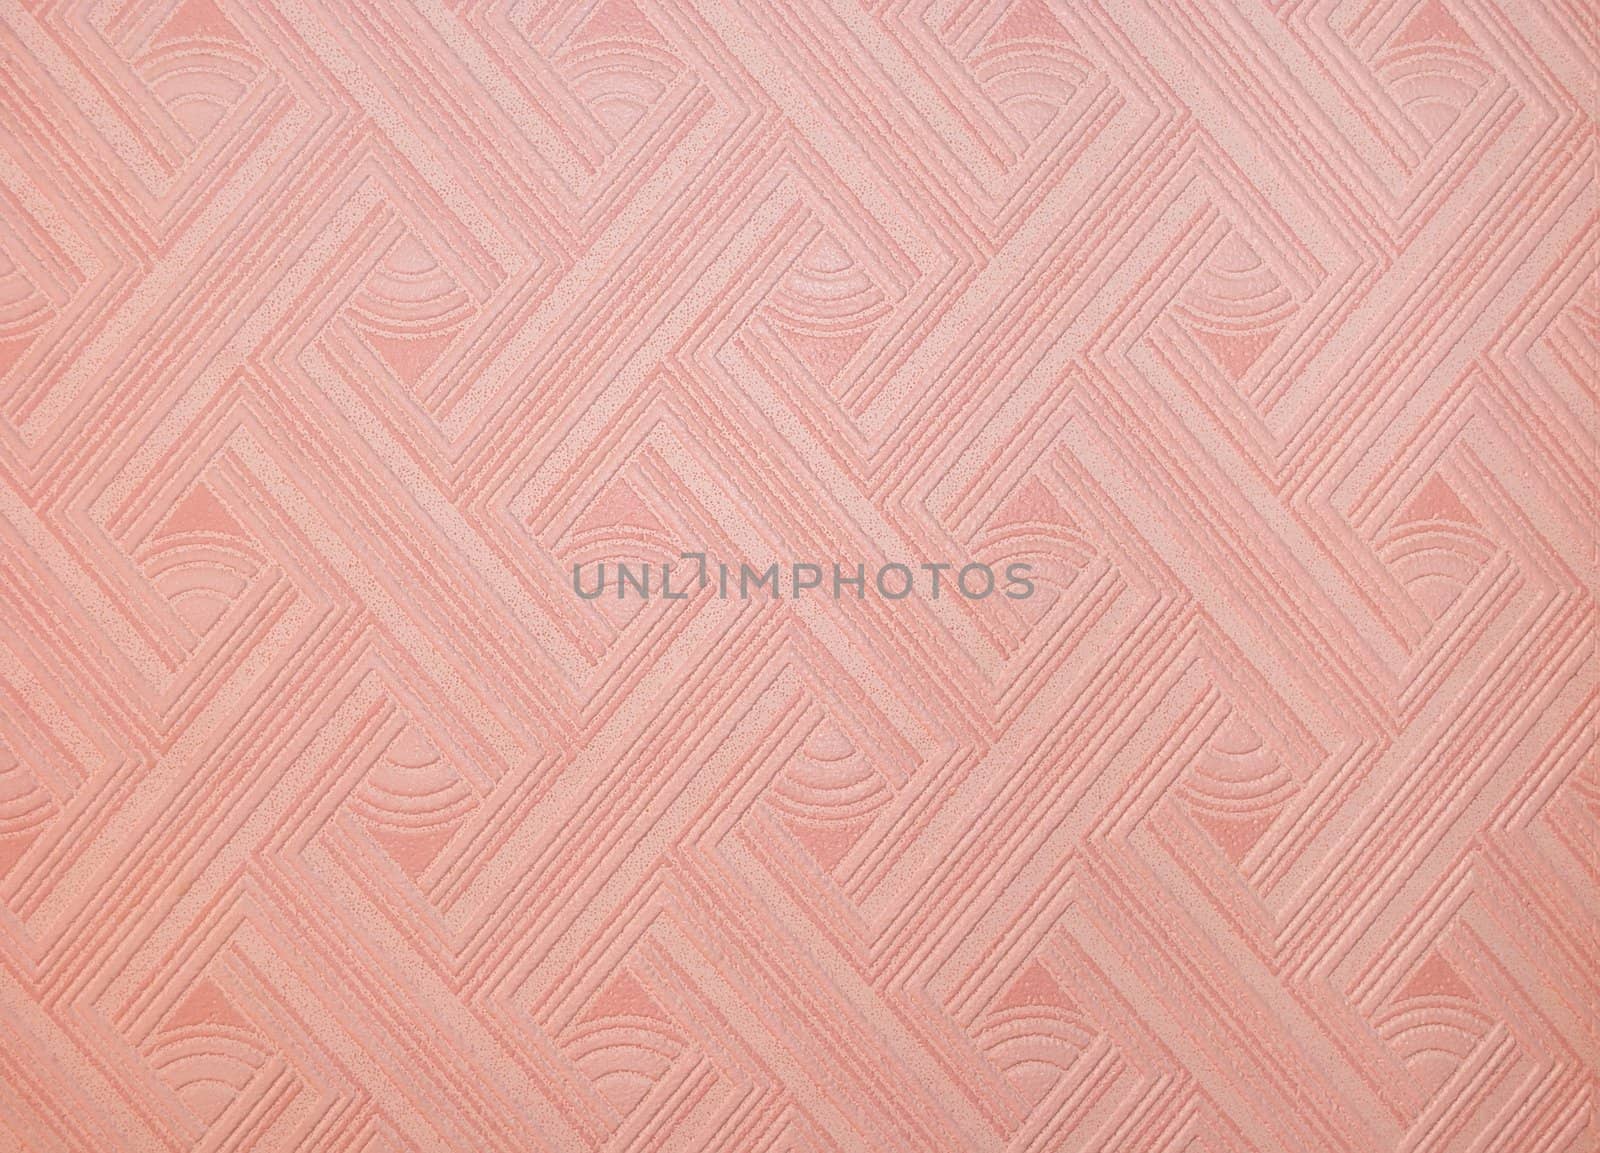 Wallpaper background. Volume pink . Straight lines.